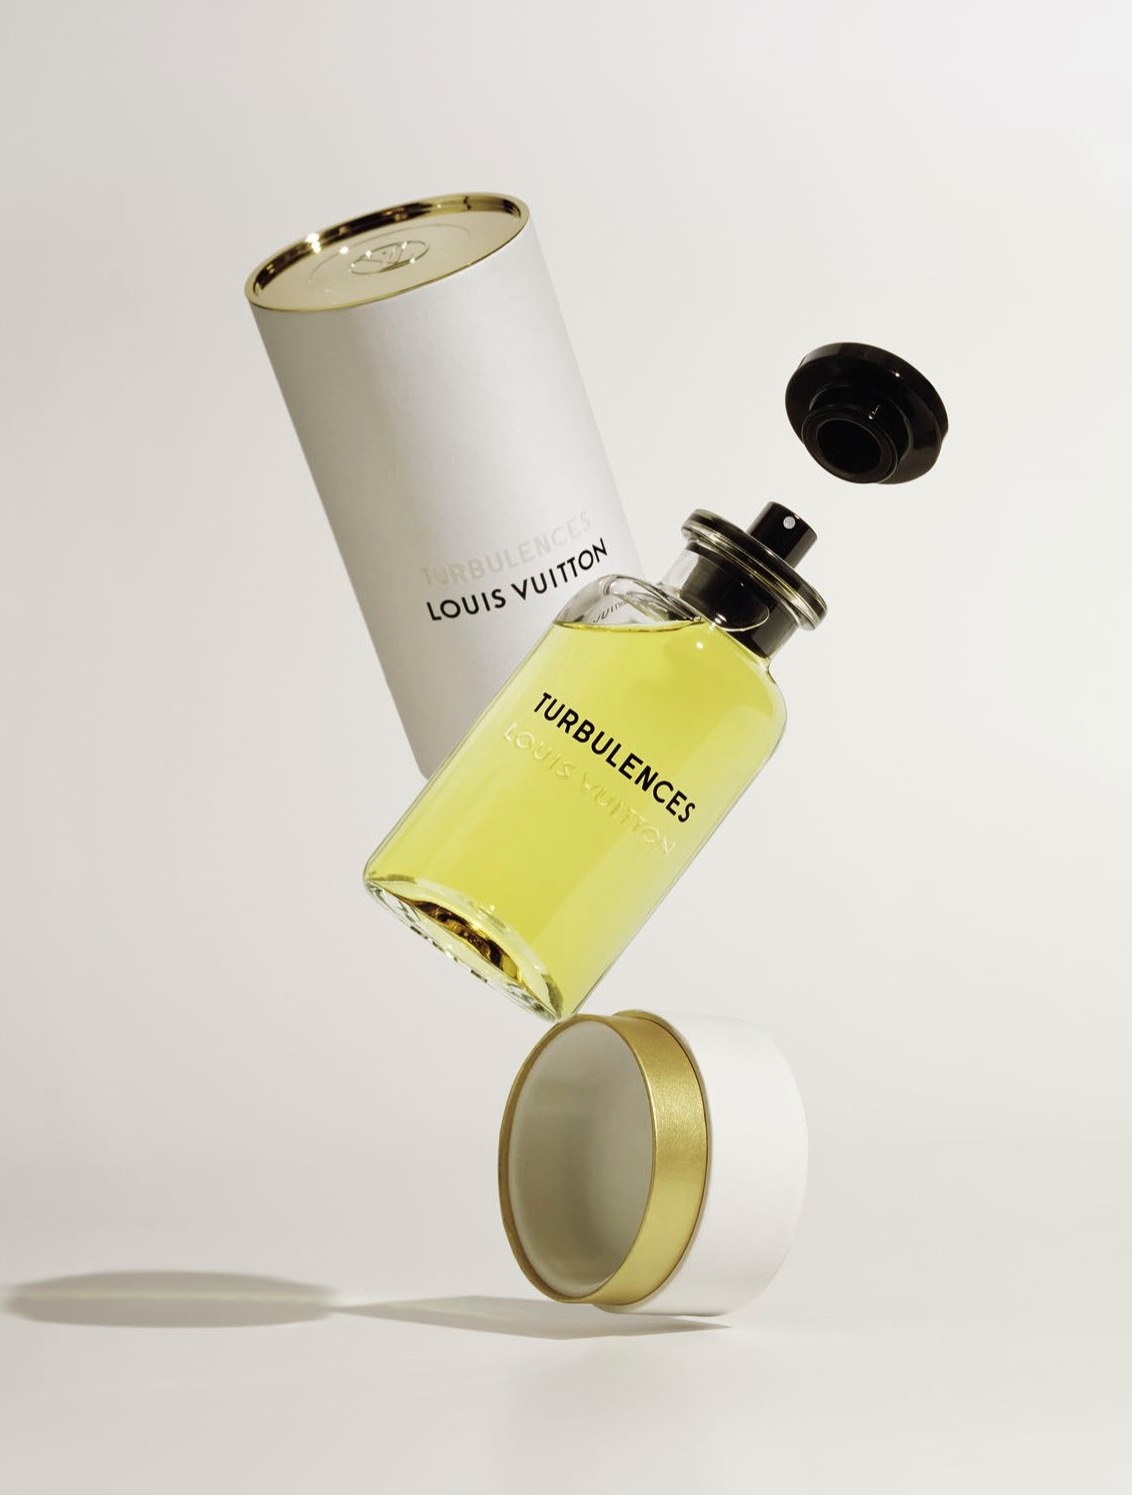 Louis Vuitton returns to the world of perfumes - Associació de